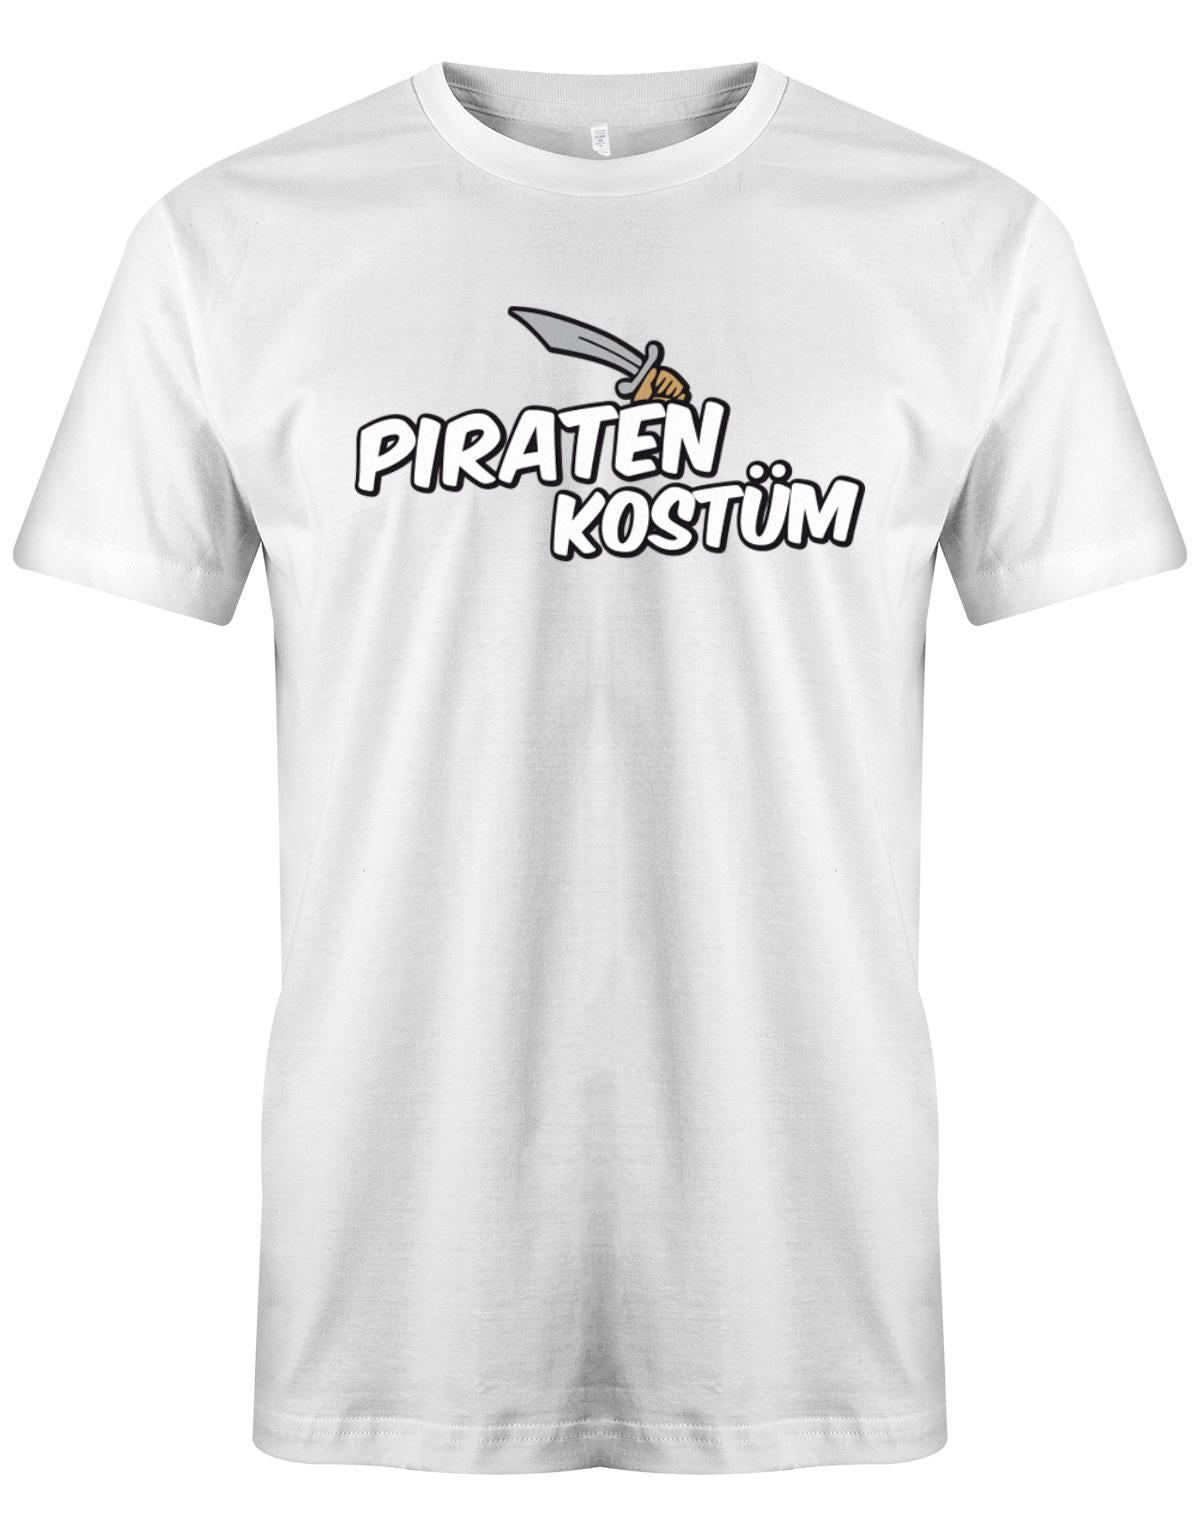 Piraten-Kost-m-Fasching-Karneval-herren-Shirt-Weiss